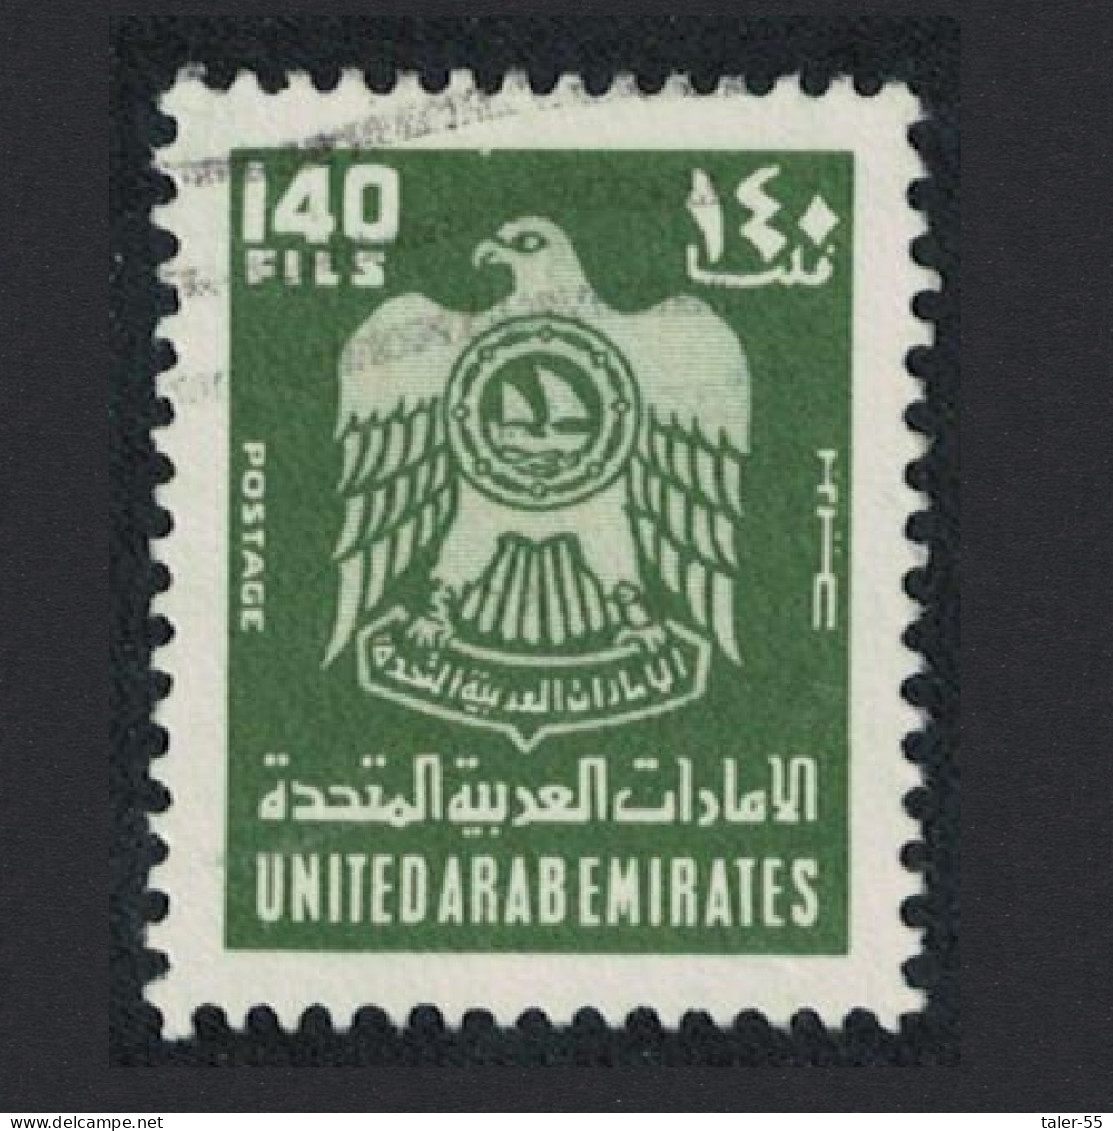 United Arab Emirates Crest Bird 140 Fils 1976 MNH SG#66 MI#66 - Emiratos Árabes Unidos